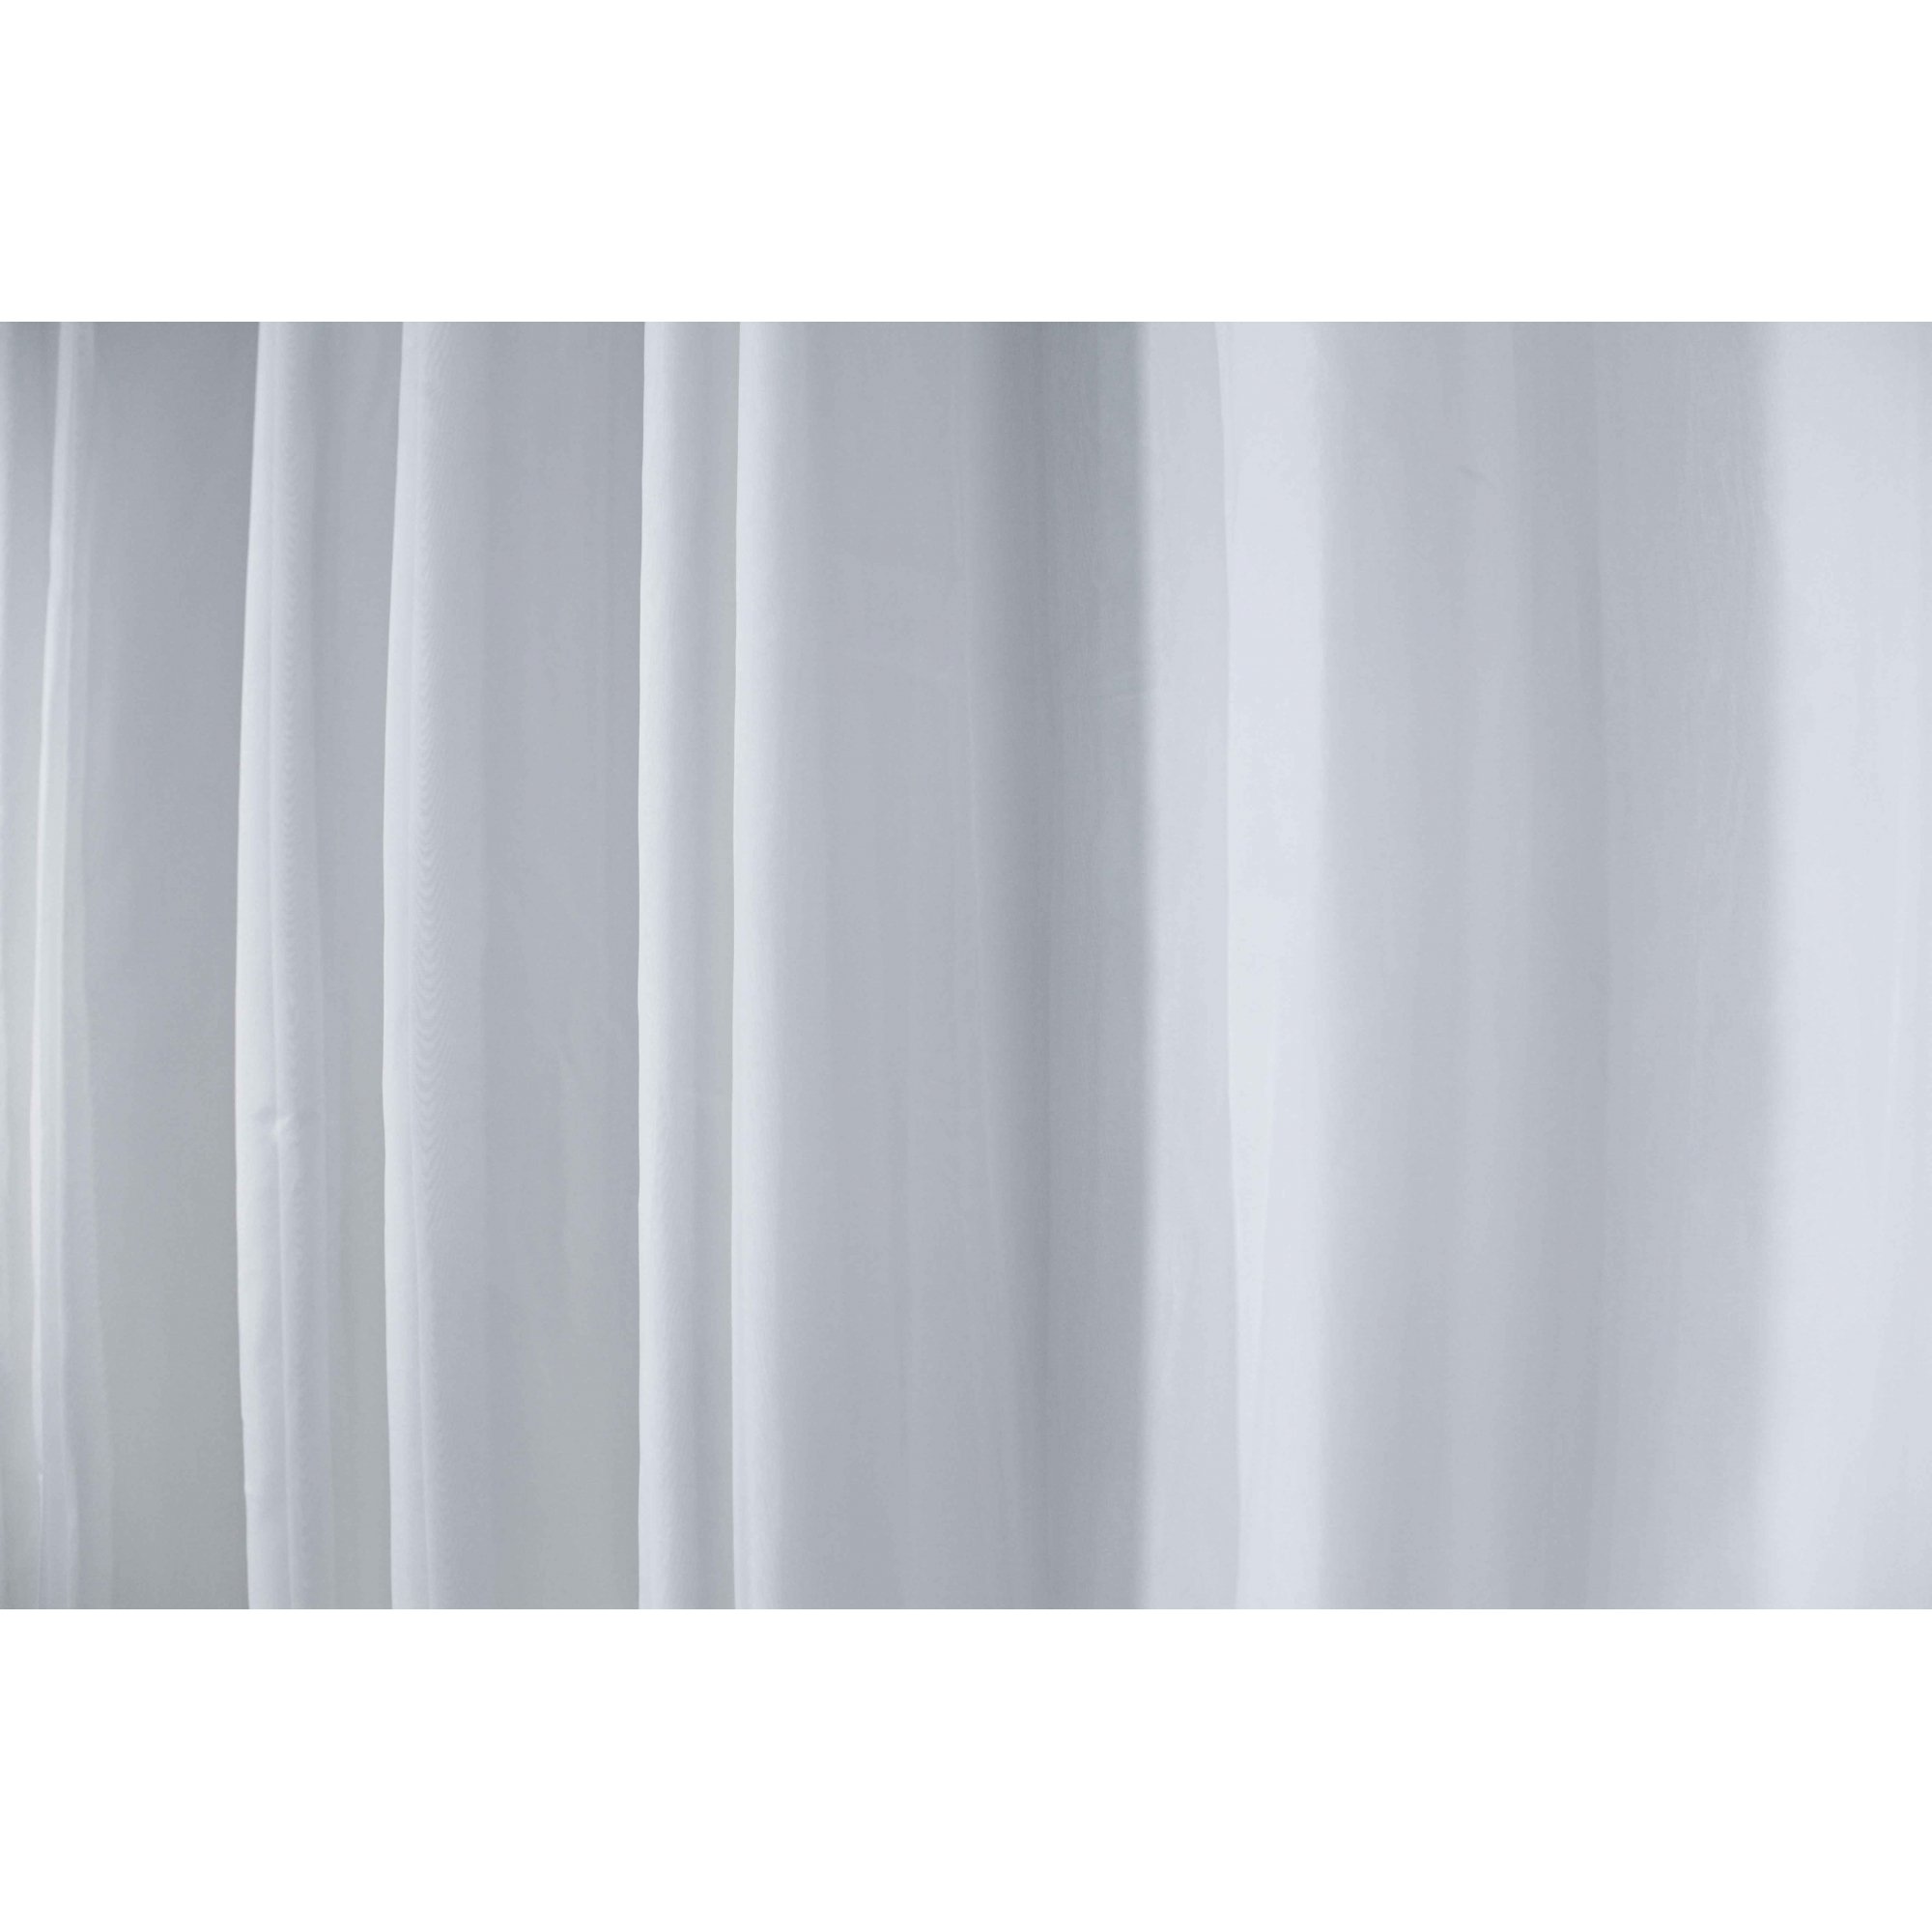 Cortina Voil com microfibra 2,30 altura x 5,76 largura Branca - 2